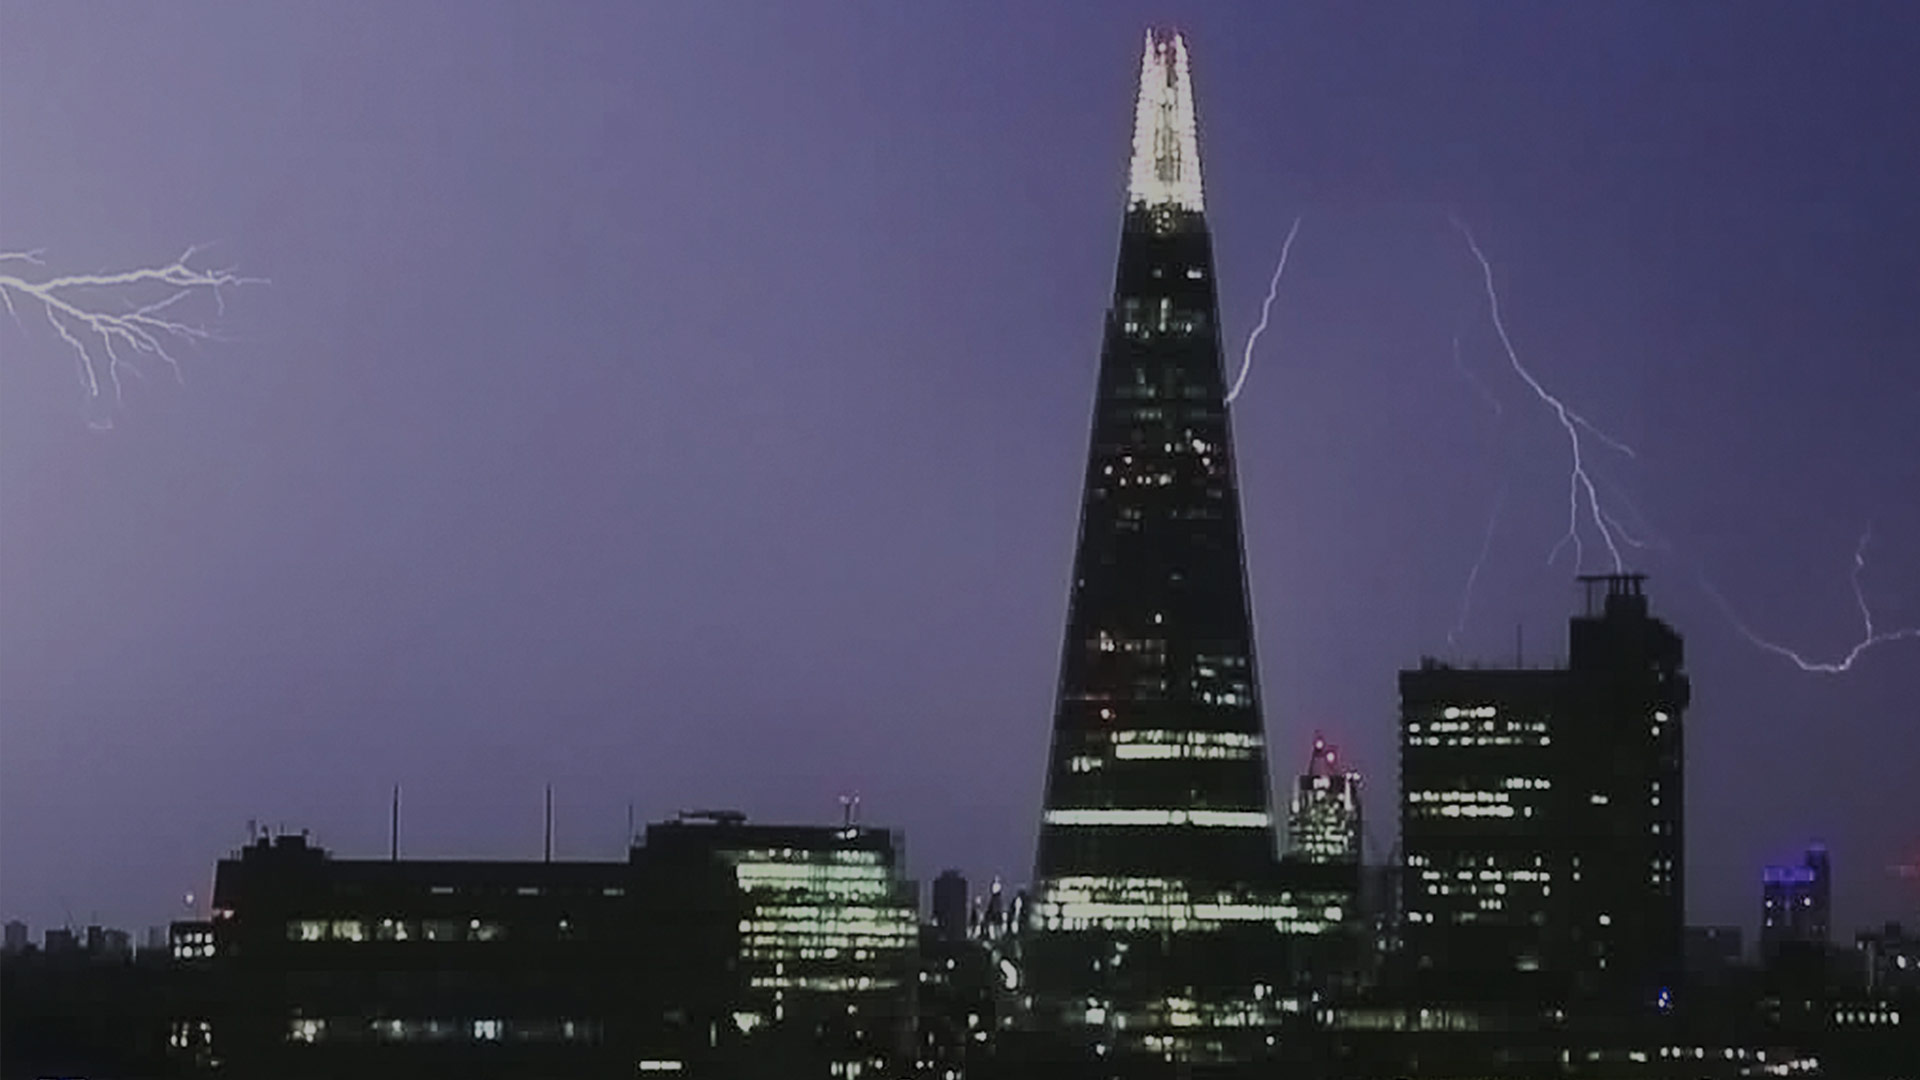 Stormy Skies London The Shard Lightning Strikes Nulty Lighting Design Studio View